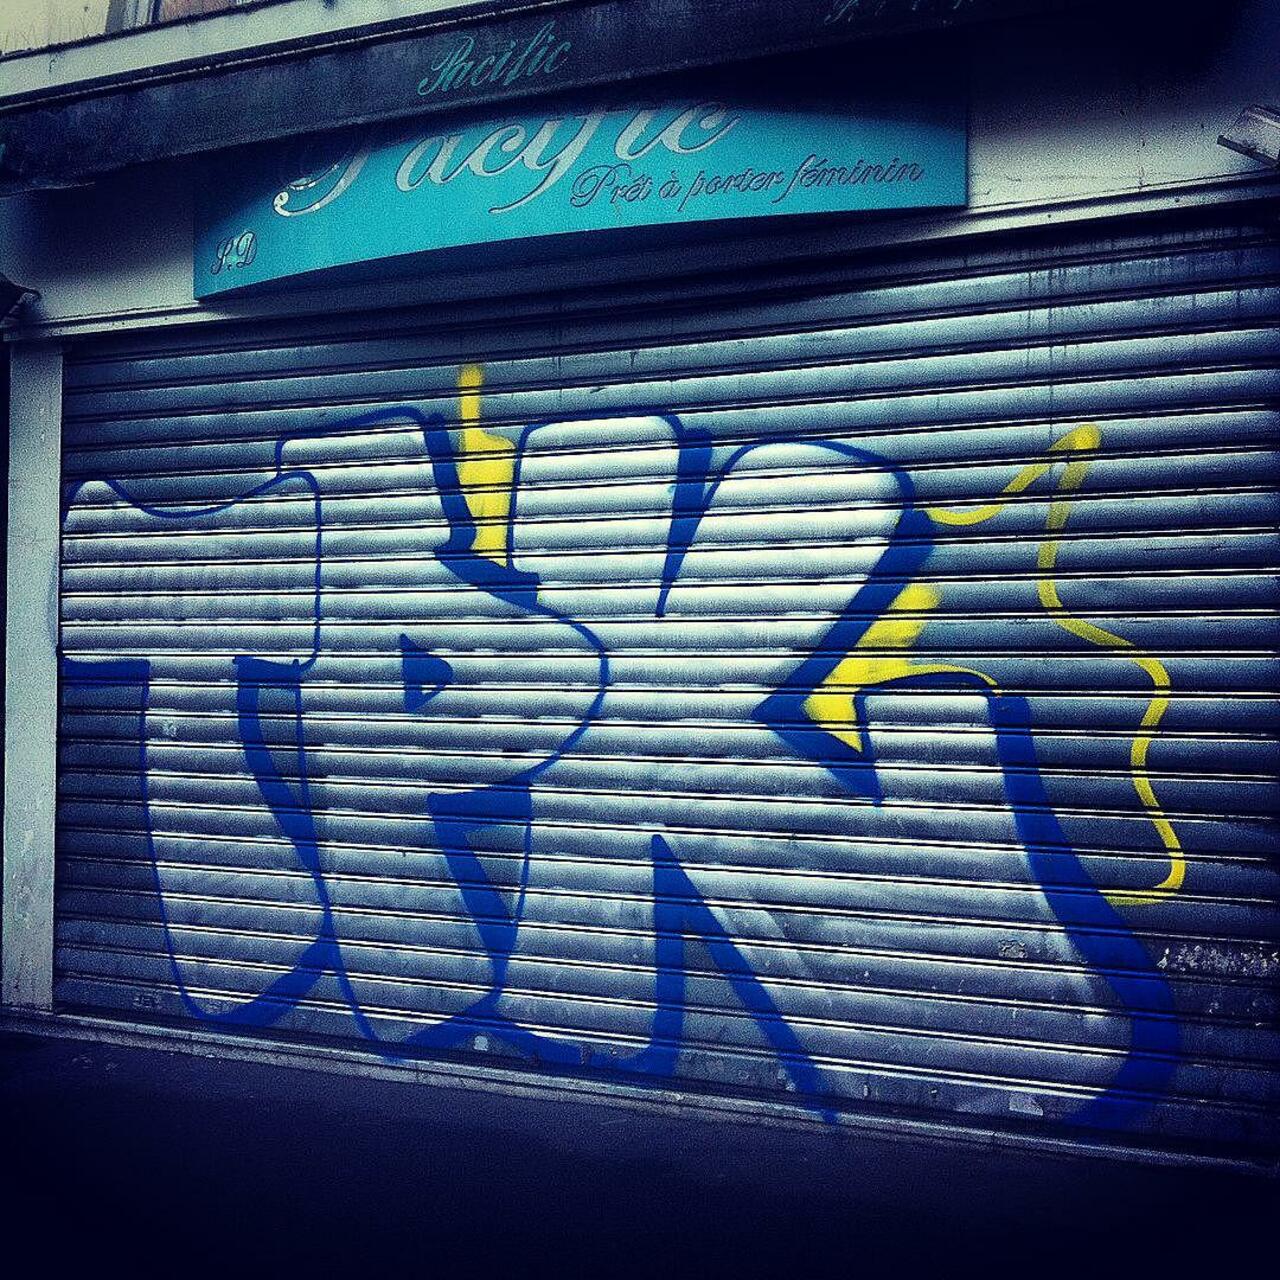 #Paris #graffiti photo by @anne__sofy http://ift.tt/1KWis1j #StreetArt http://t.co/8zxxPm8pW4